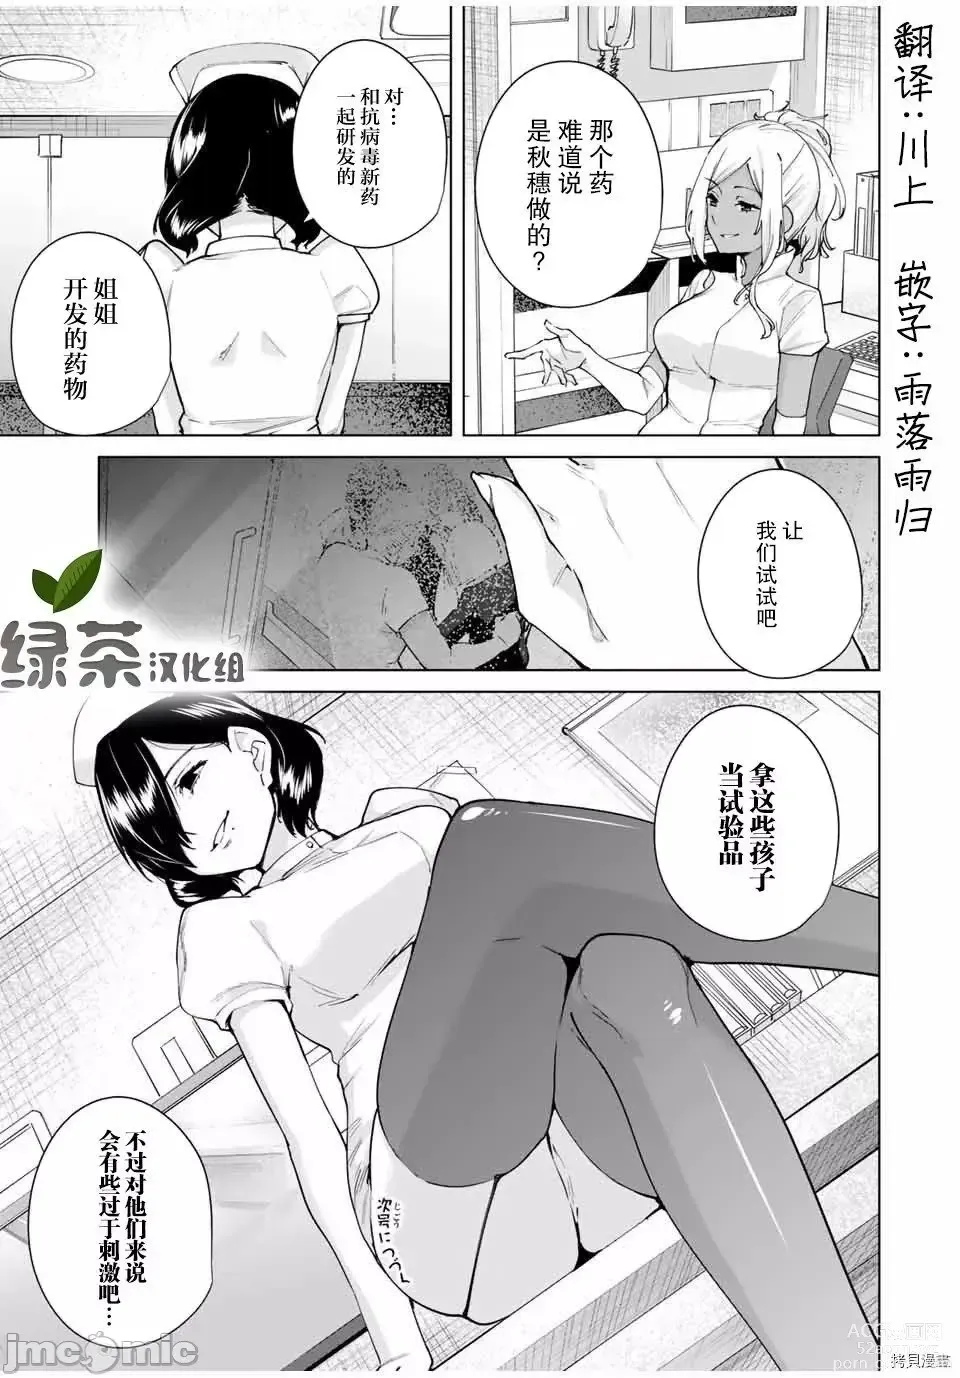 Page 186 of manga 命運戀人 Destiny Lovers 【汉化版】1